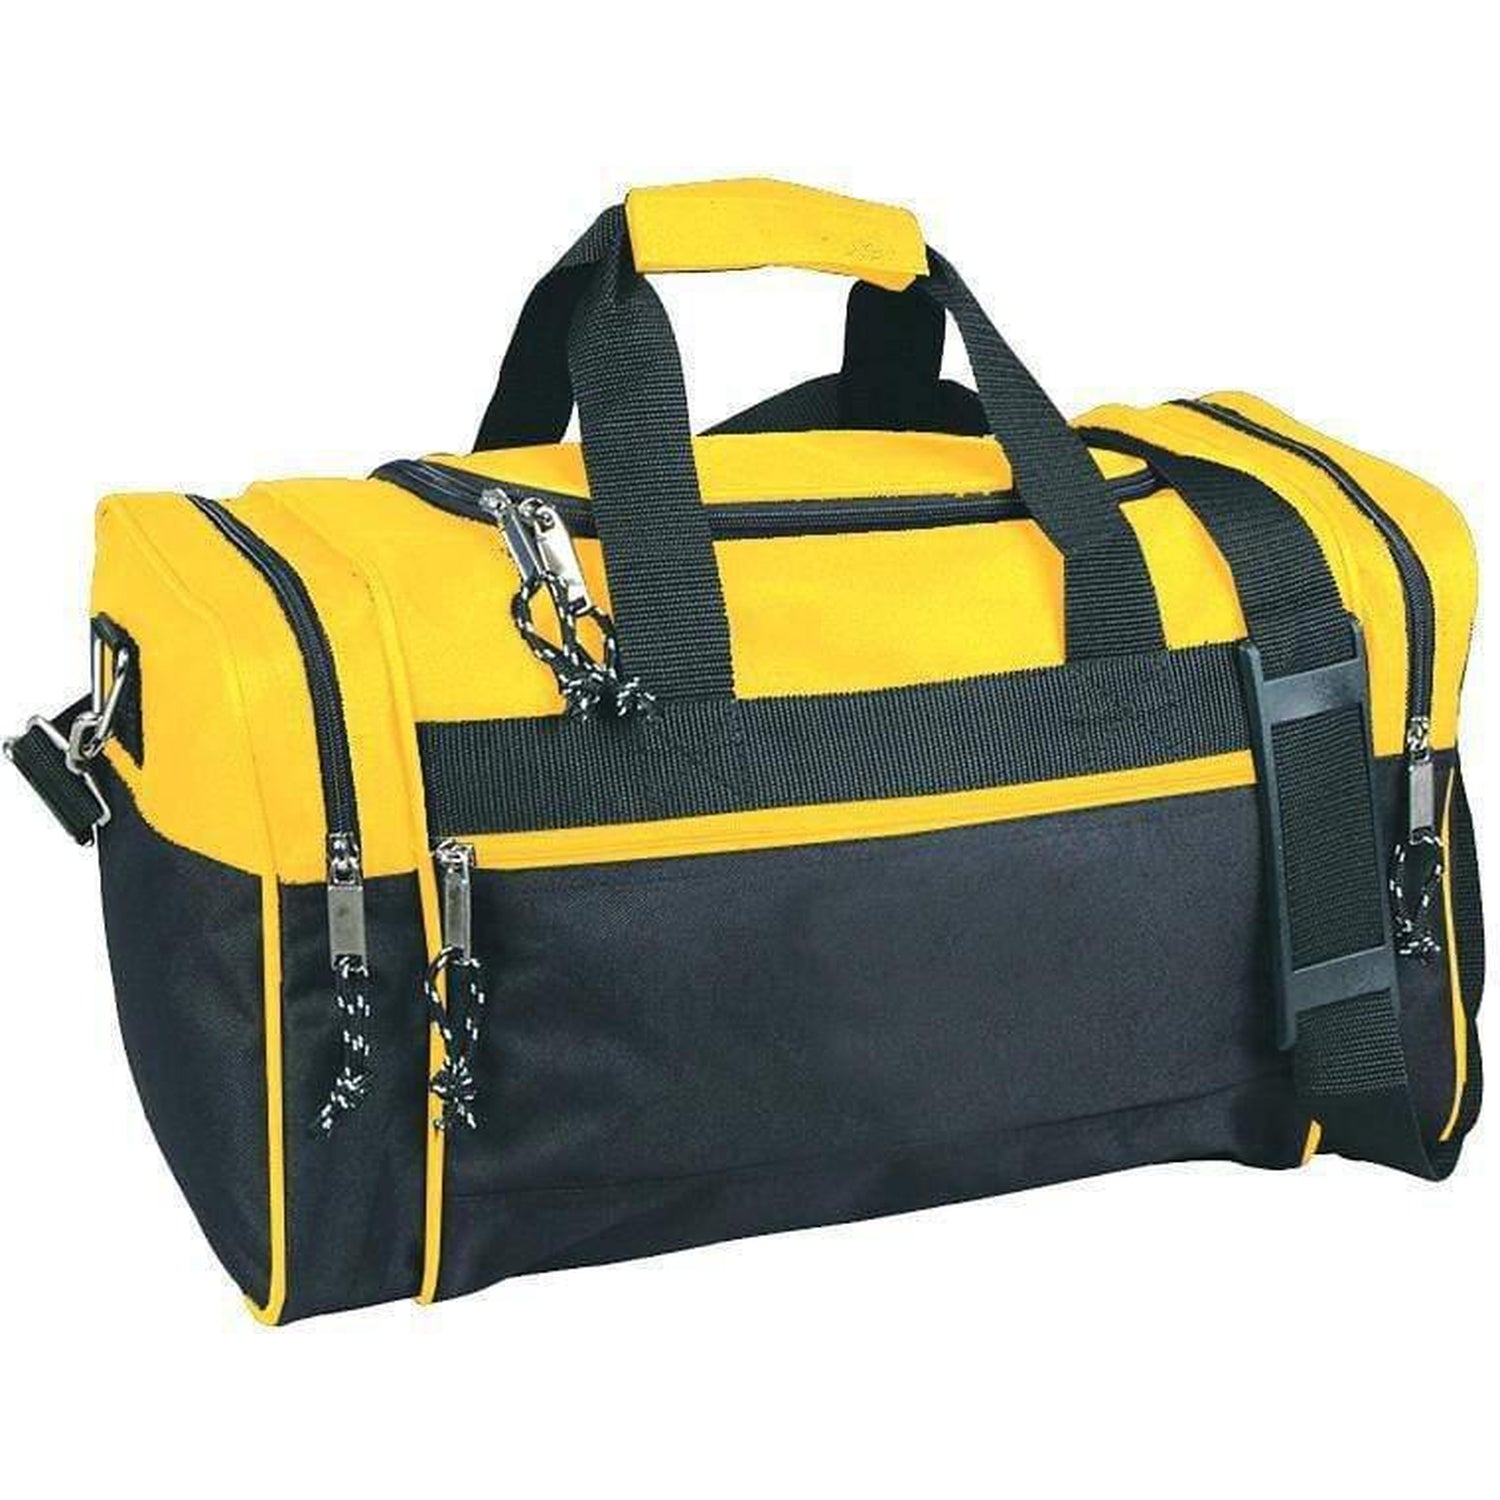 Wholesale Duffle Bags - Zippered Gym Travel Duffle Bags in Bulk – BagzDepot™